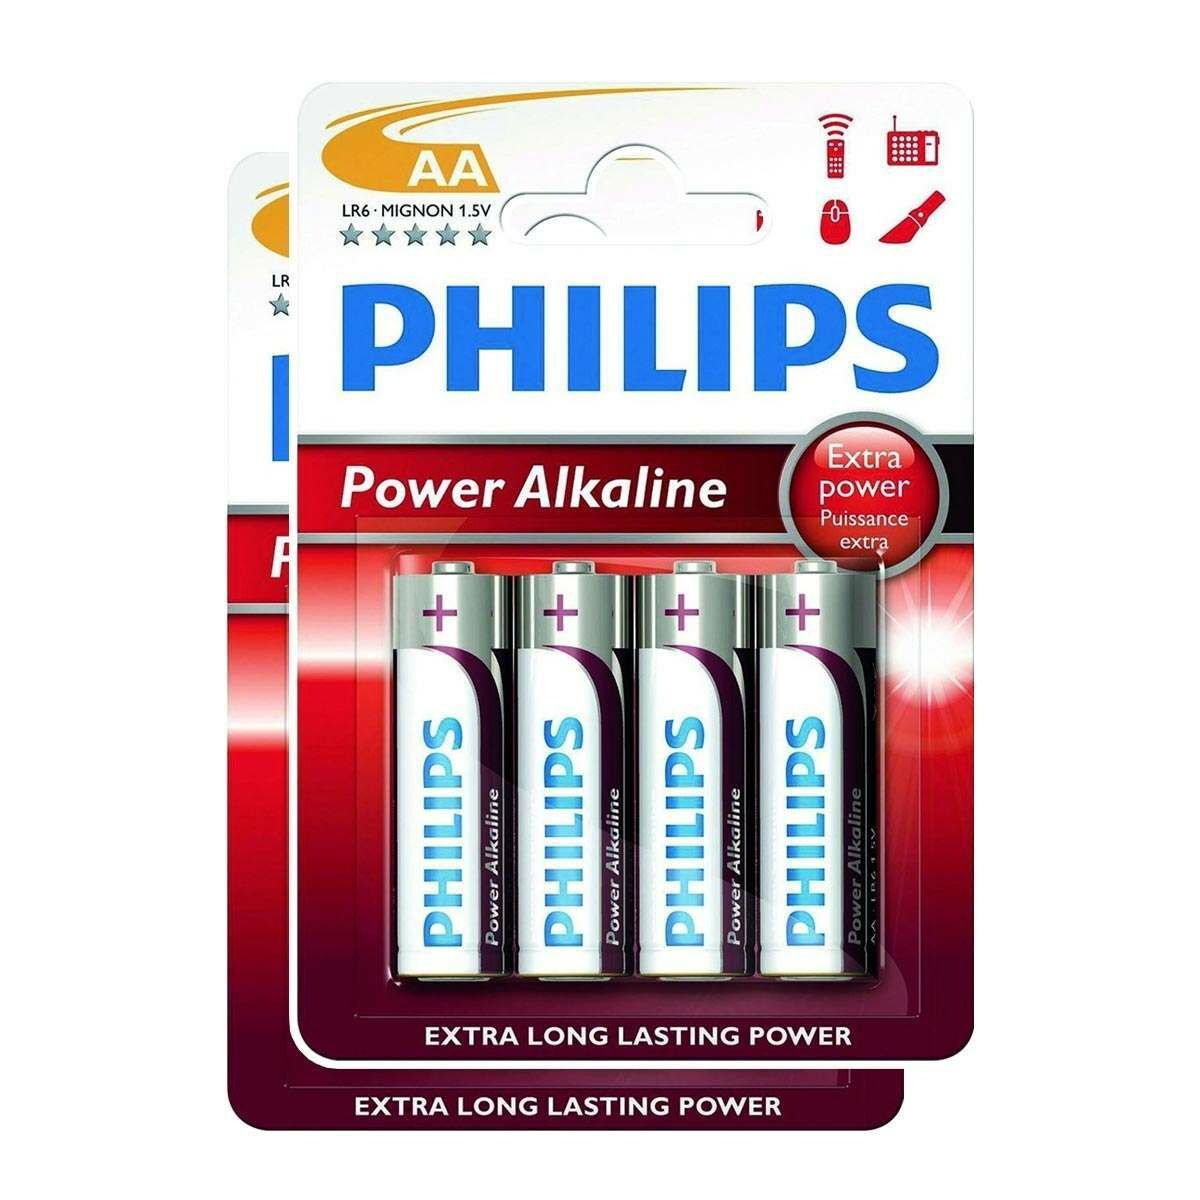 Philips Power Alkaline AA Batteries (Pack of 8) image 1